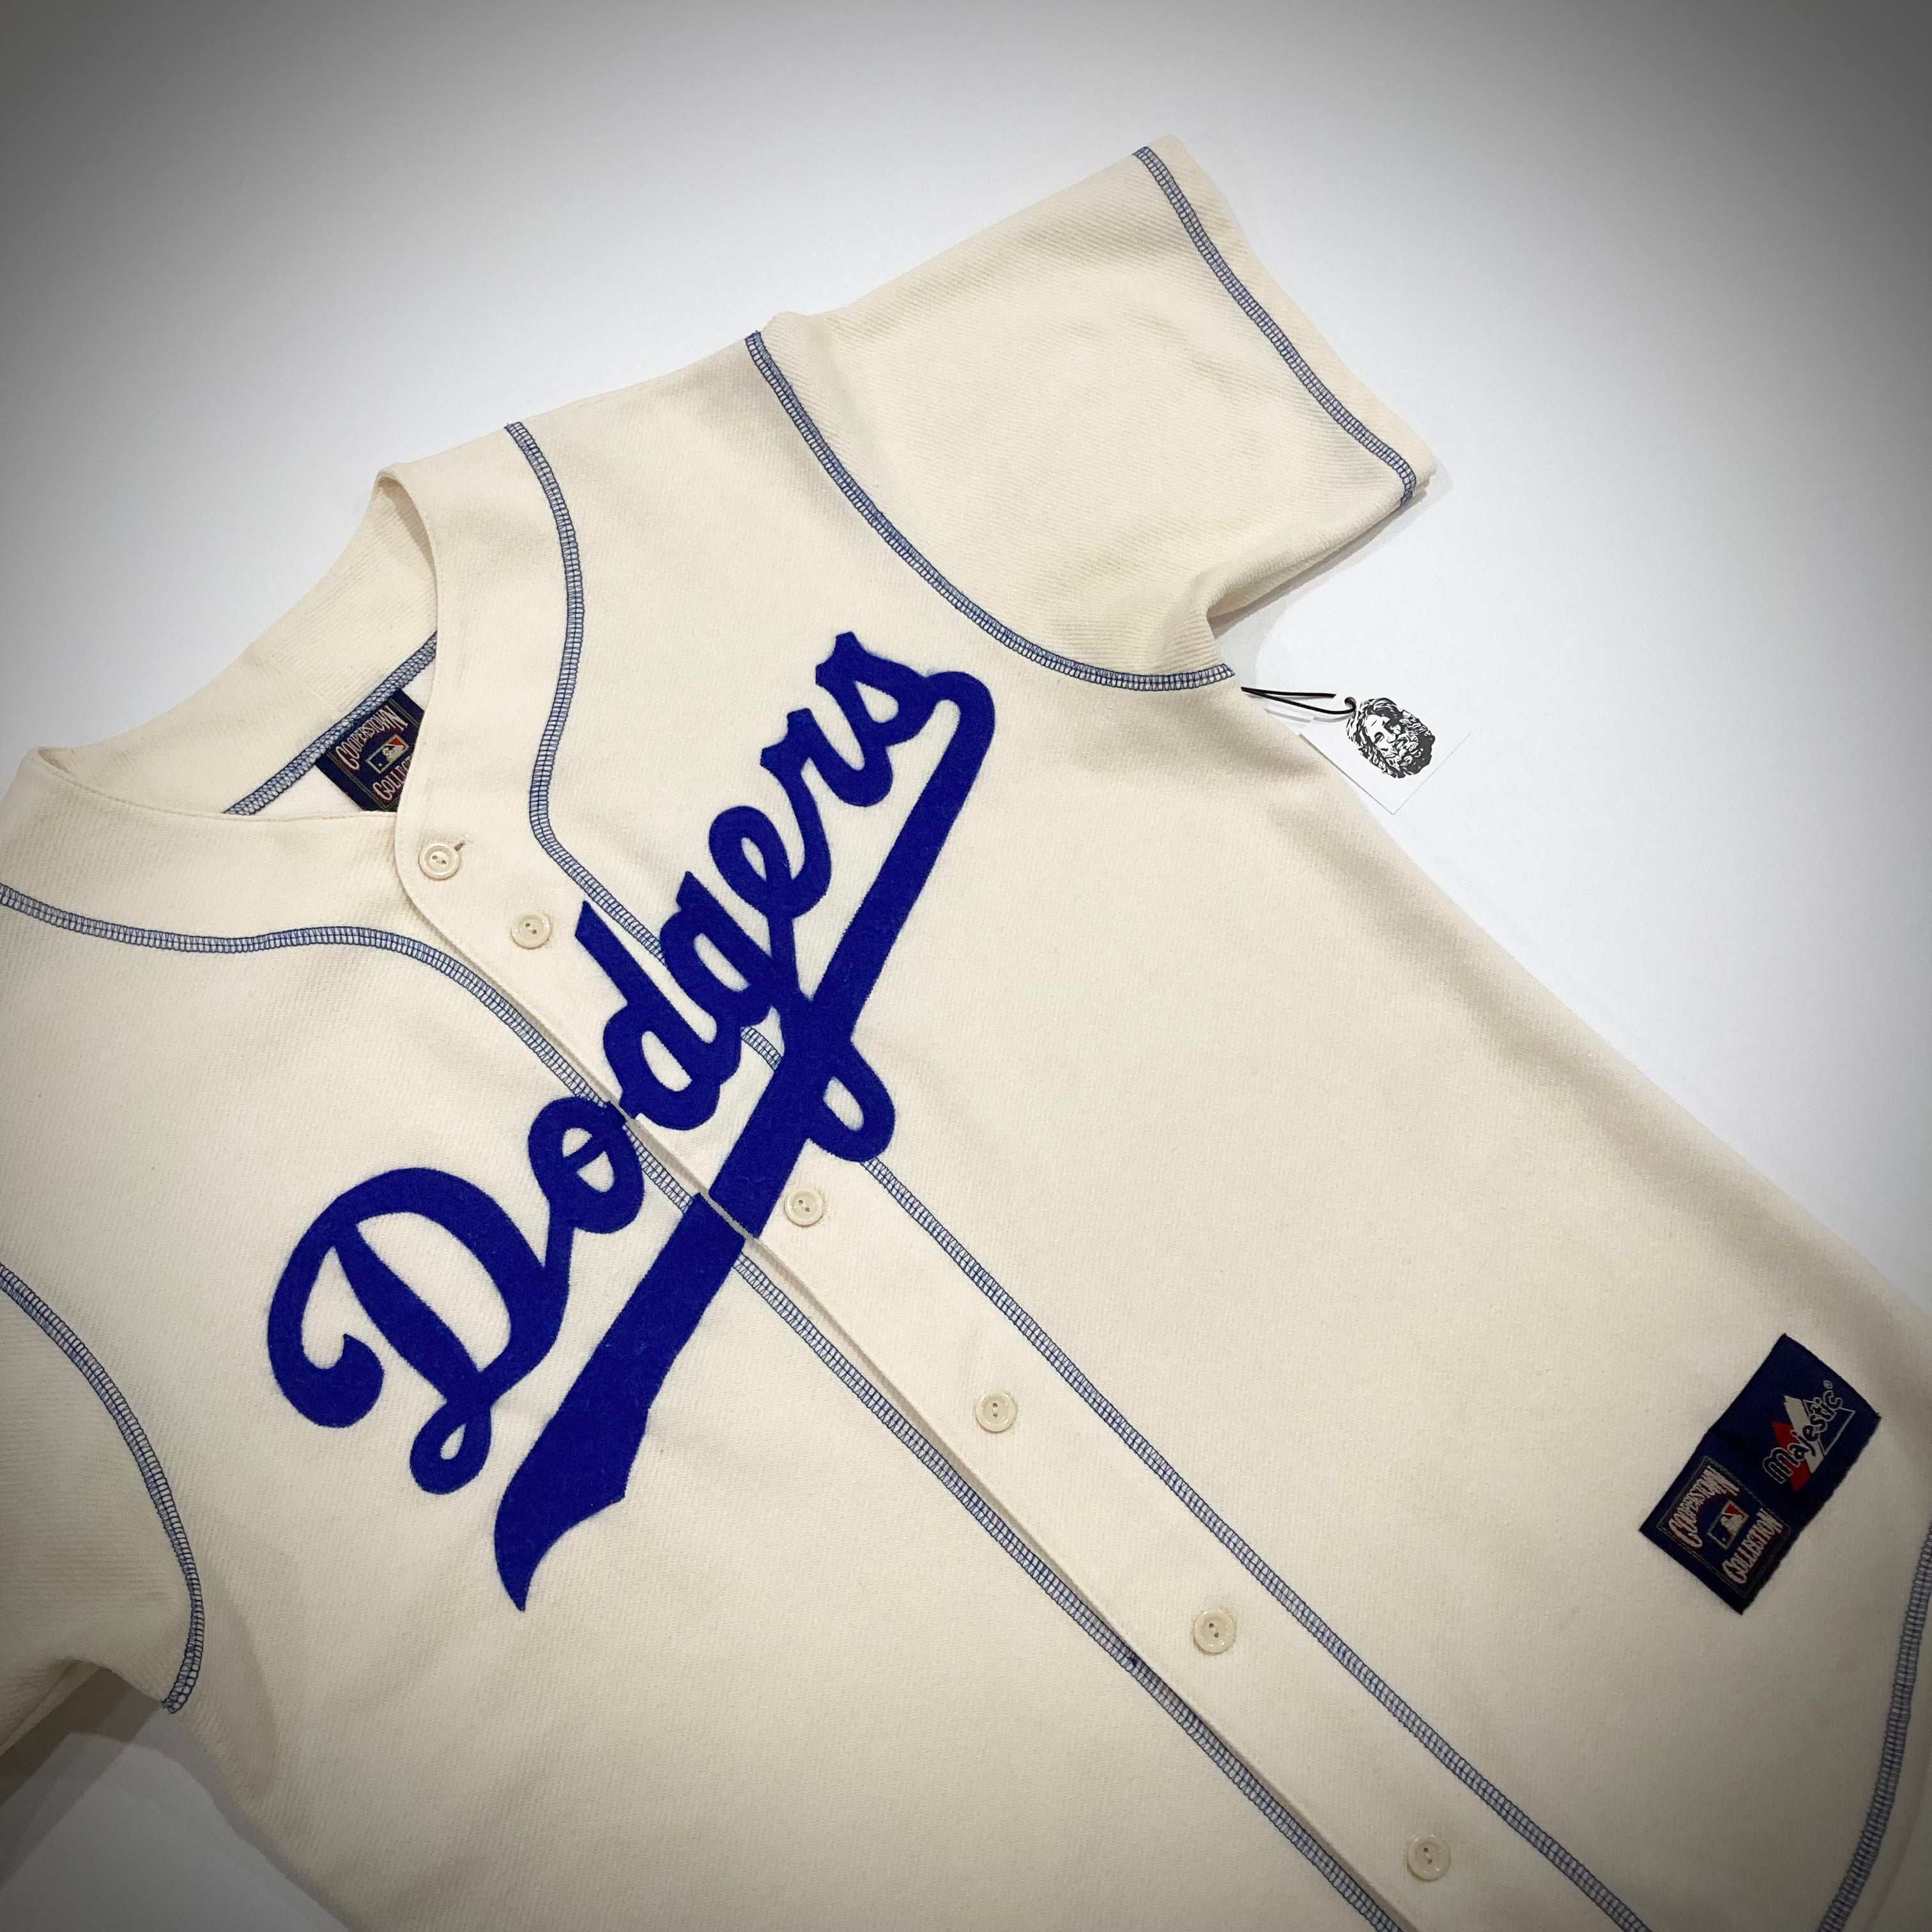 Vintage 70s Brooklyn Dodgers Jersey Roman Pro Medium 100% Polyester